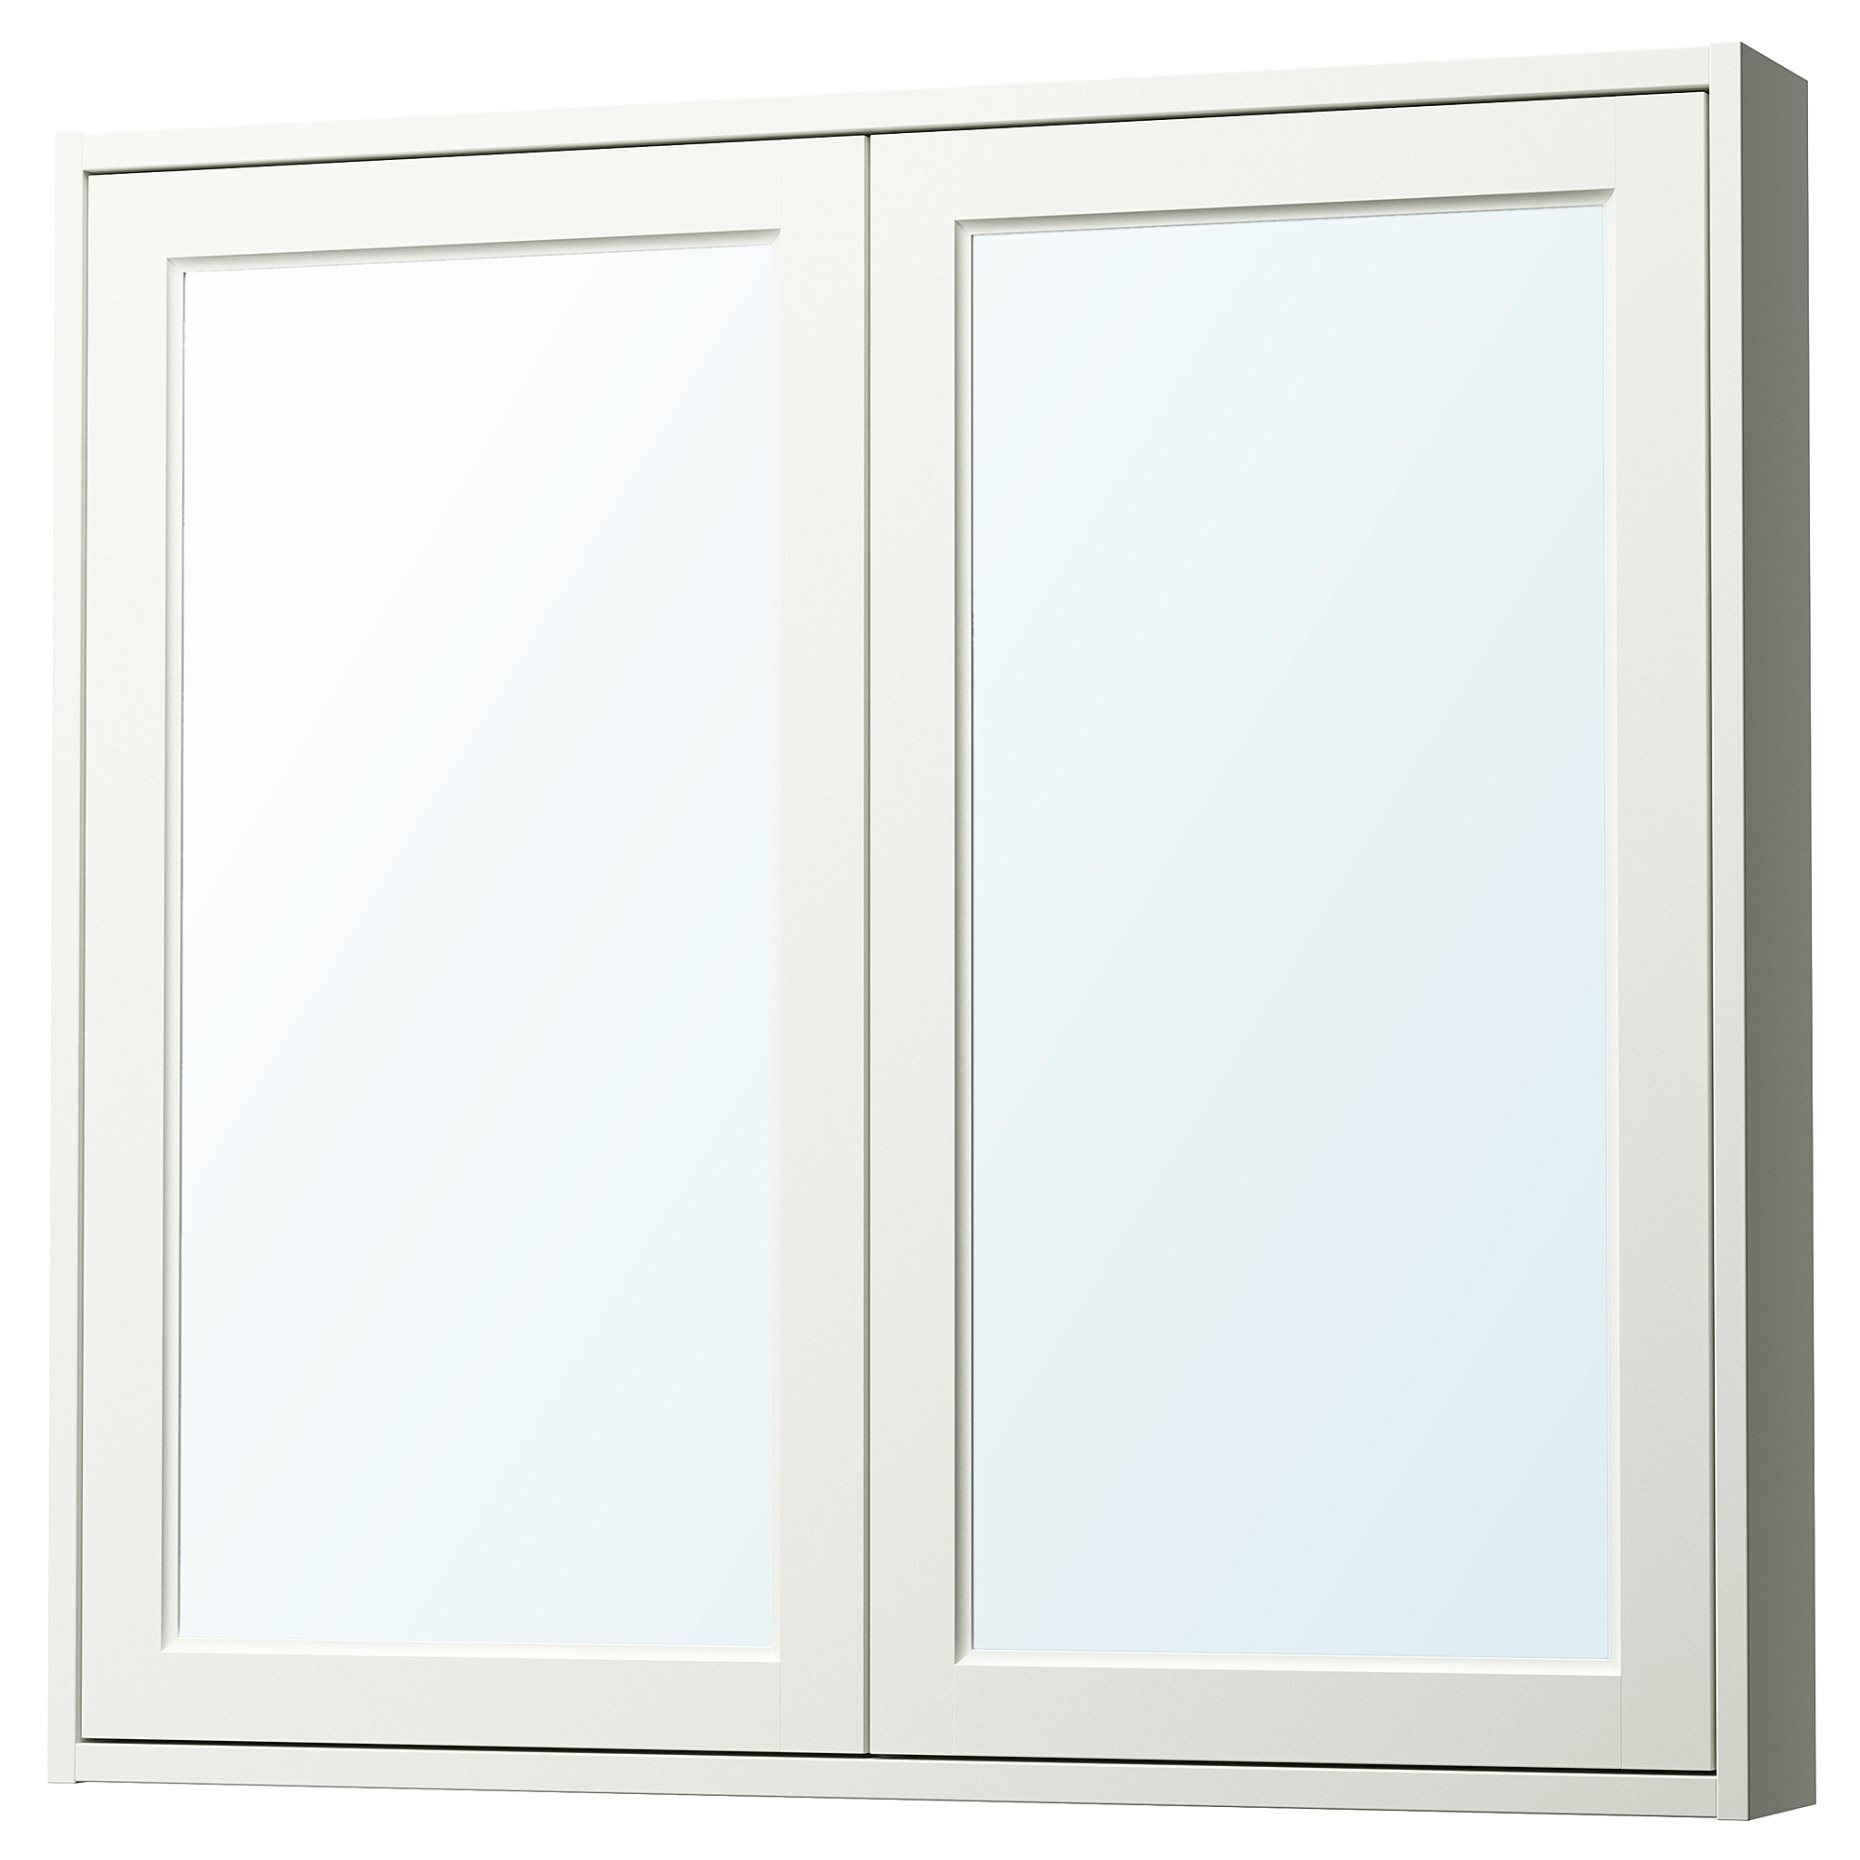 TANNFORSEN, ντουλάπι καθρέφτη με πόρτες, 100x15x95 cm, 005.552.50